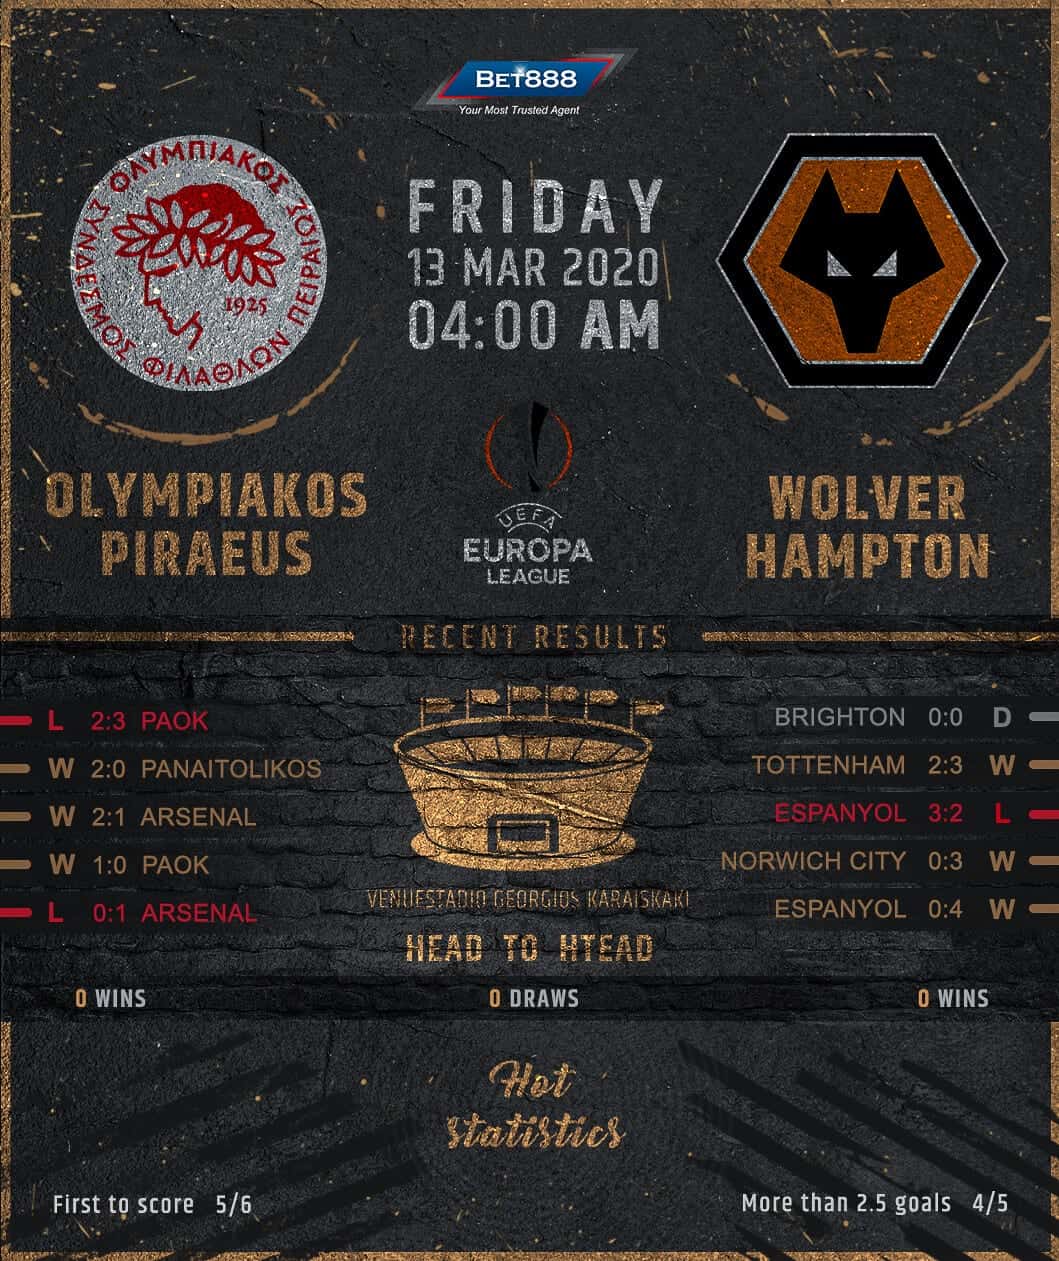 Olympiacos Piraeus vs Wolverhampton Wanderers﻿ 13/03/20